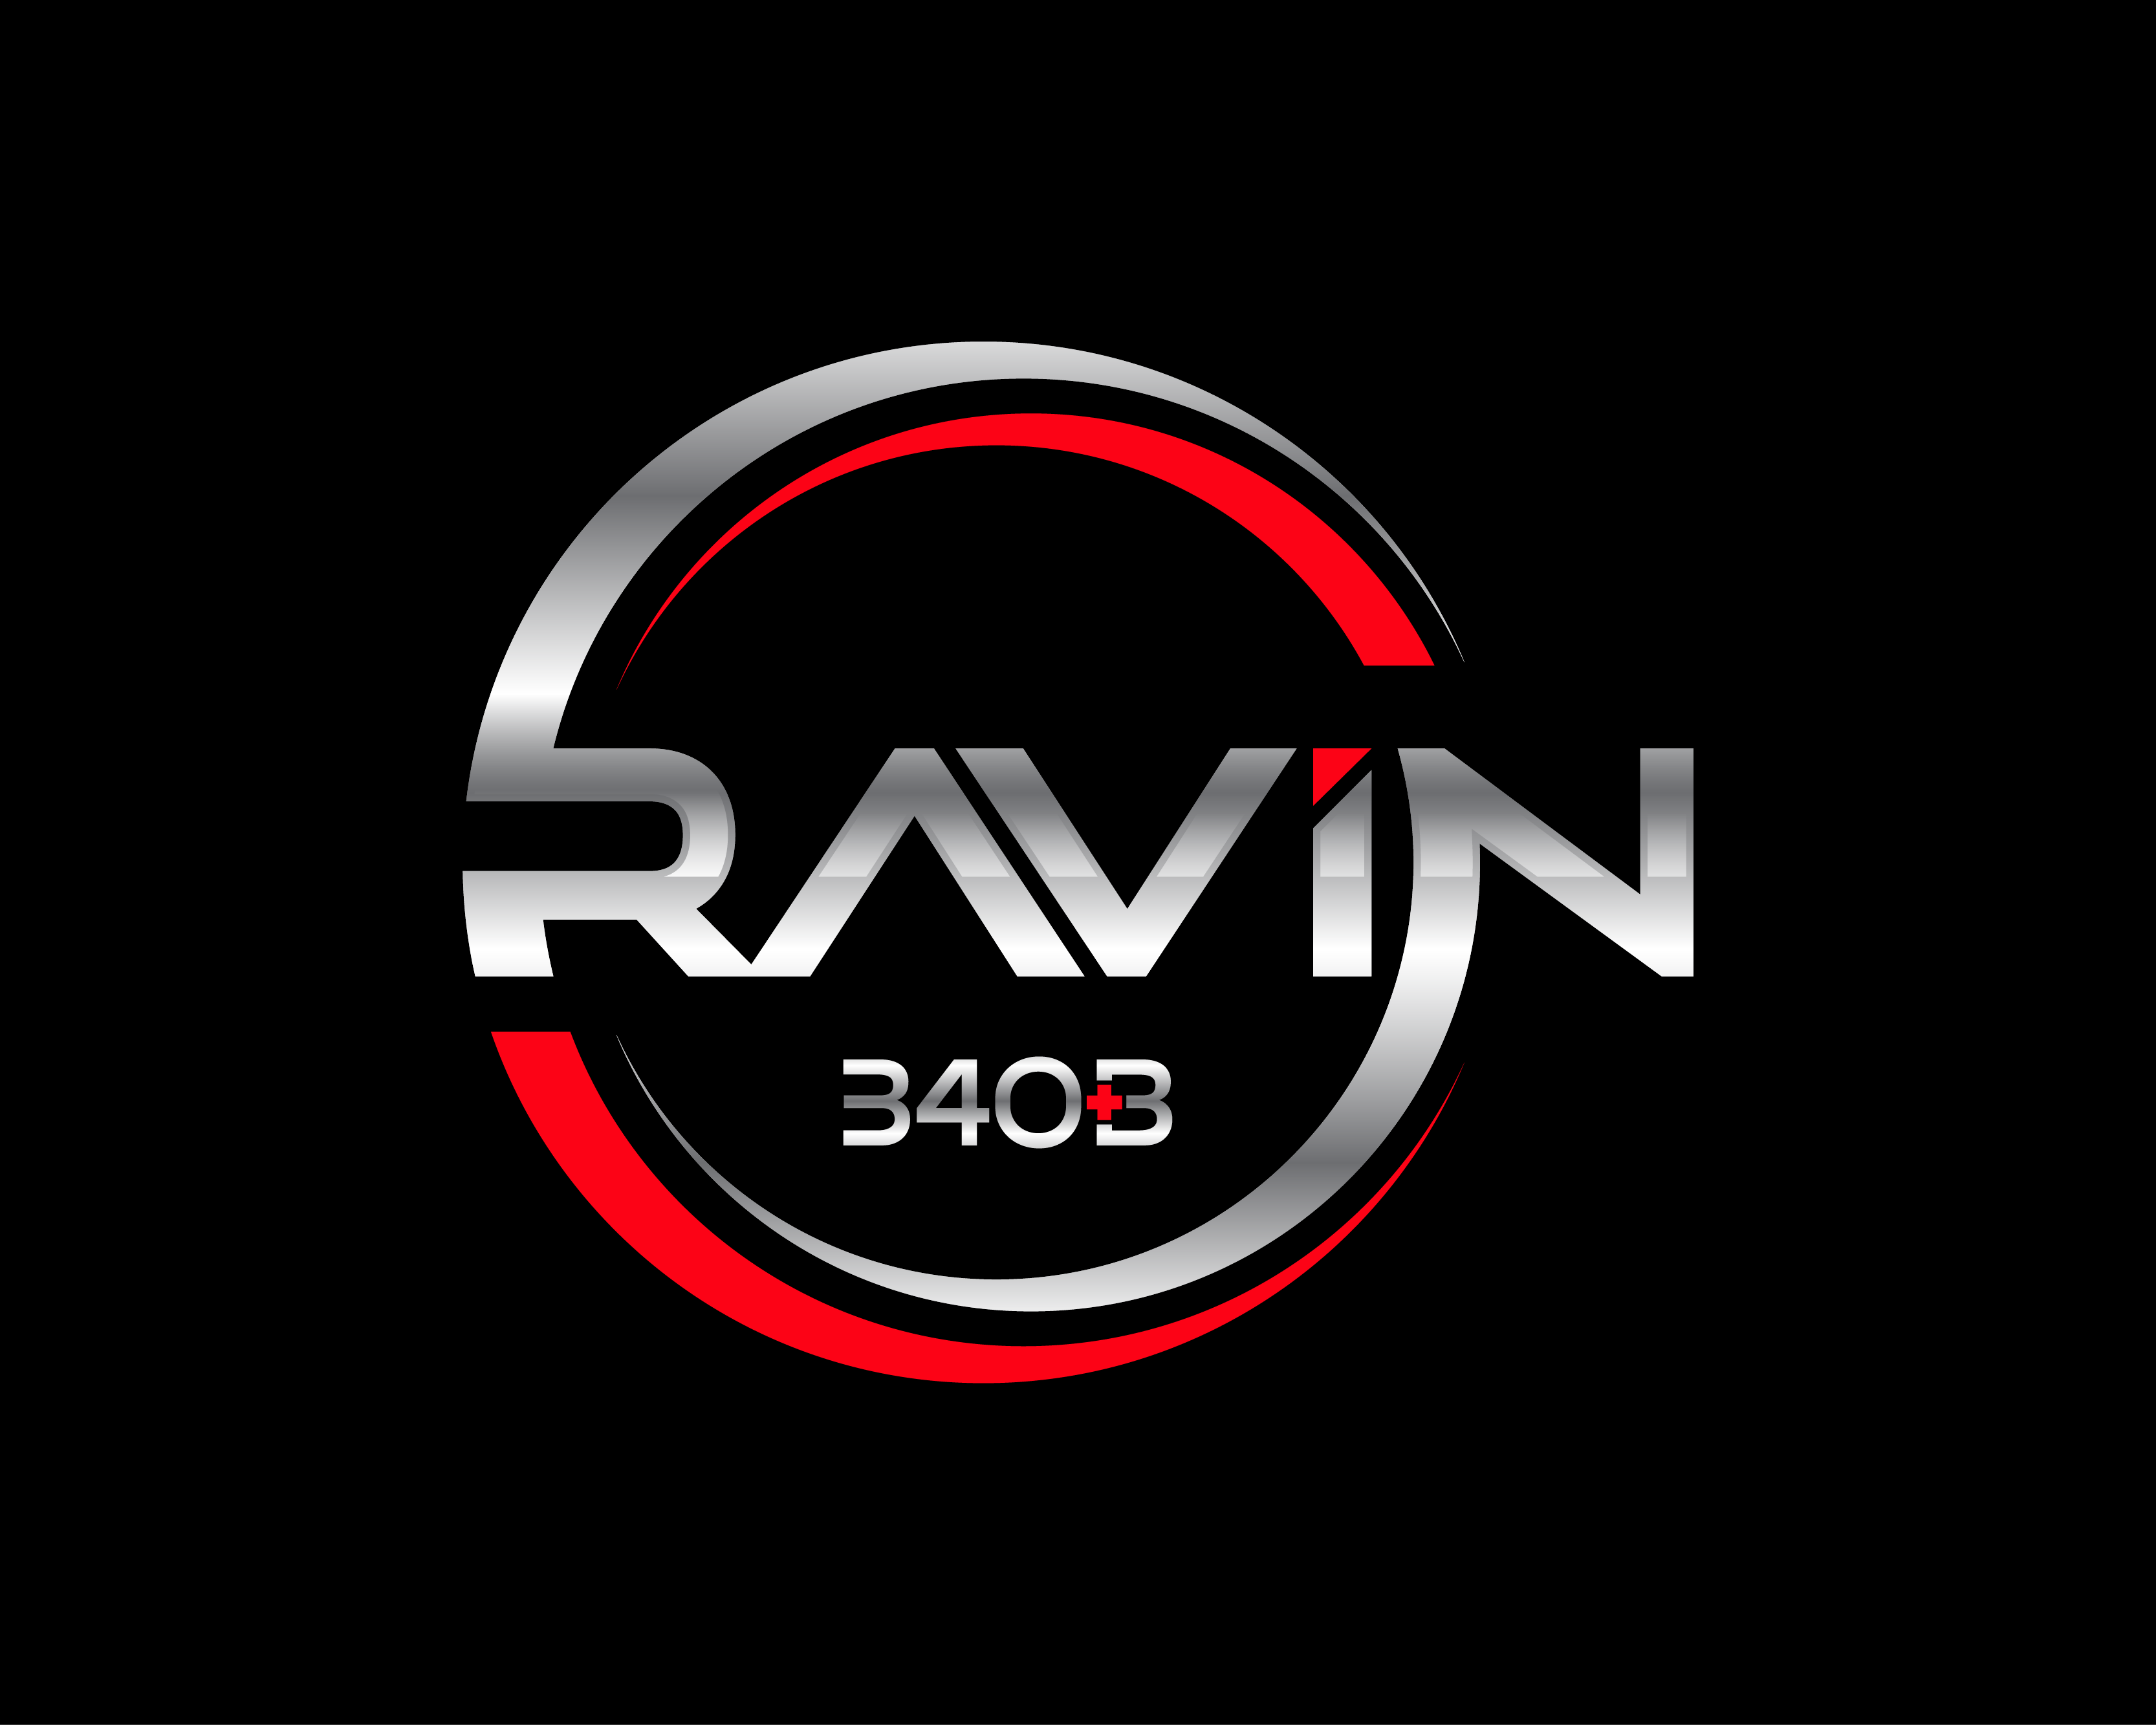 Raviant Networks Logo PNG Transparent & SVG Vector - Freebie Supply